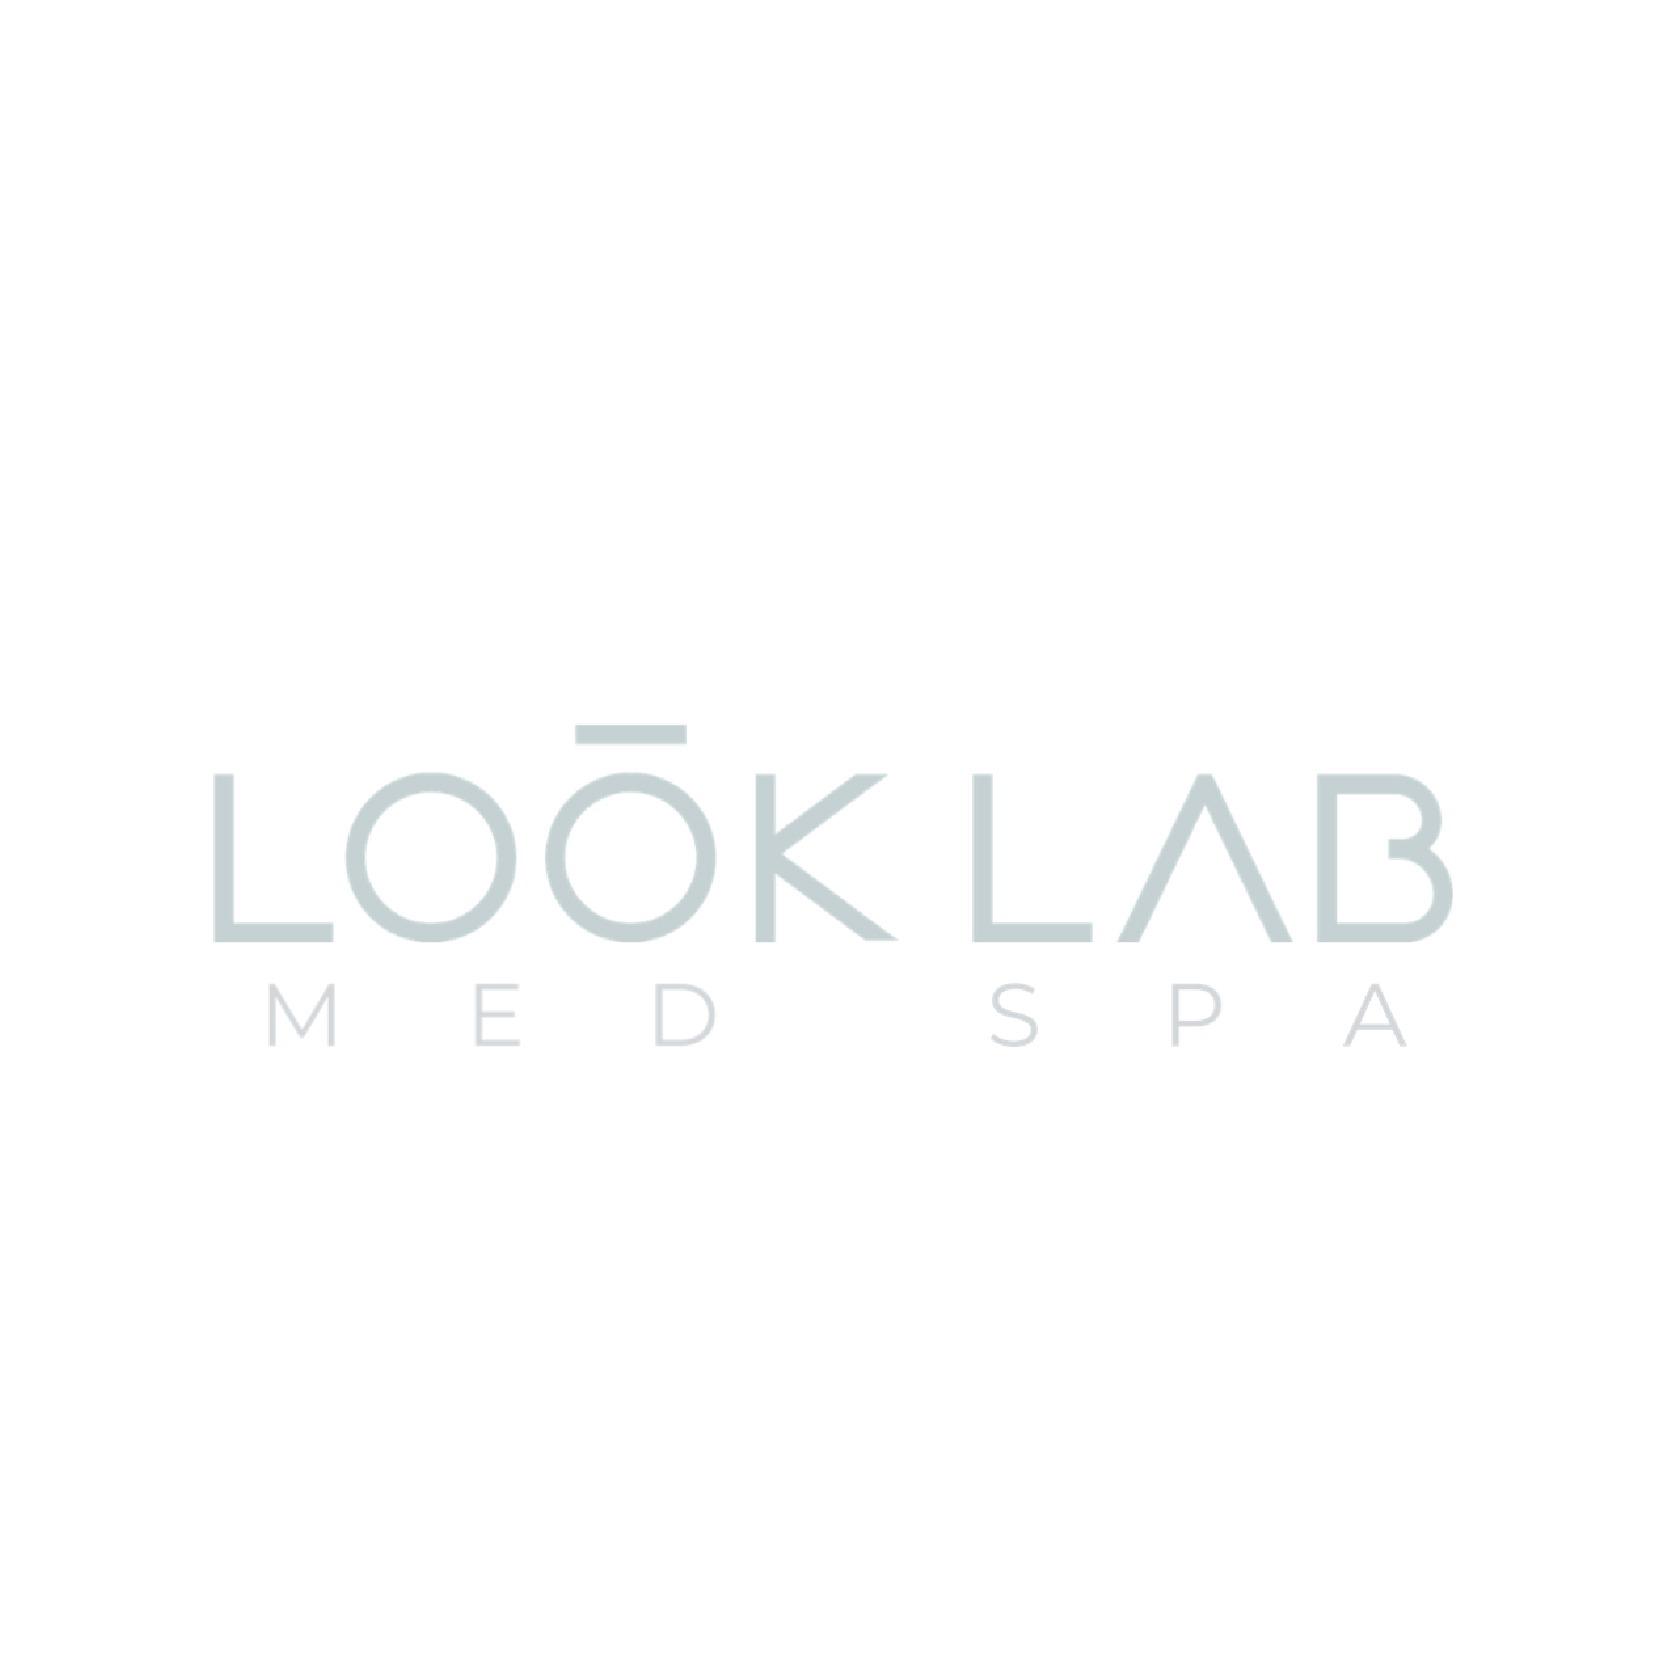 Look Lab Med Spa - Scottsdale, AZ 85255 - (480)992-5665 | ShowMeLocal.com